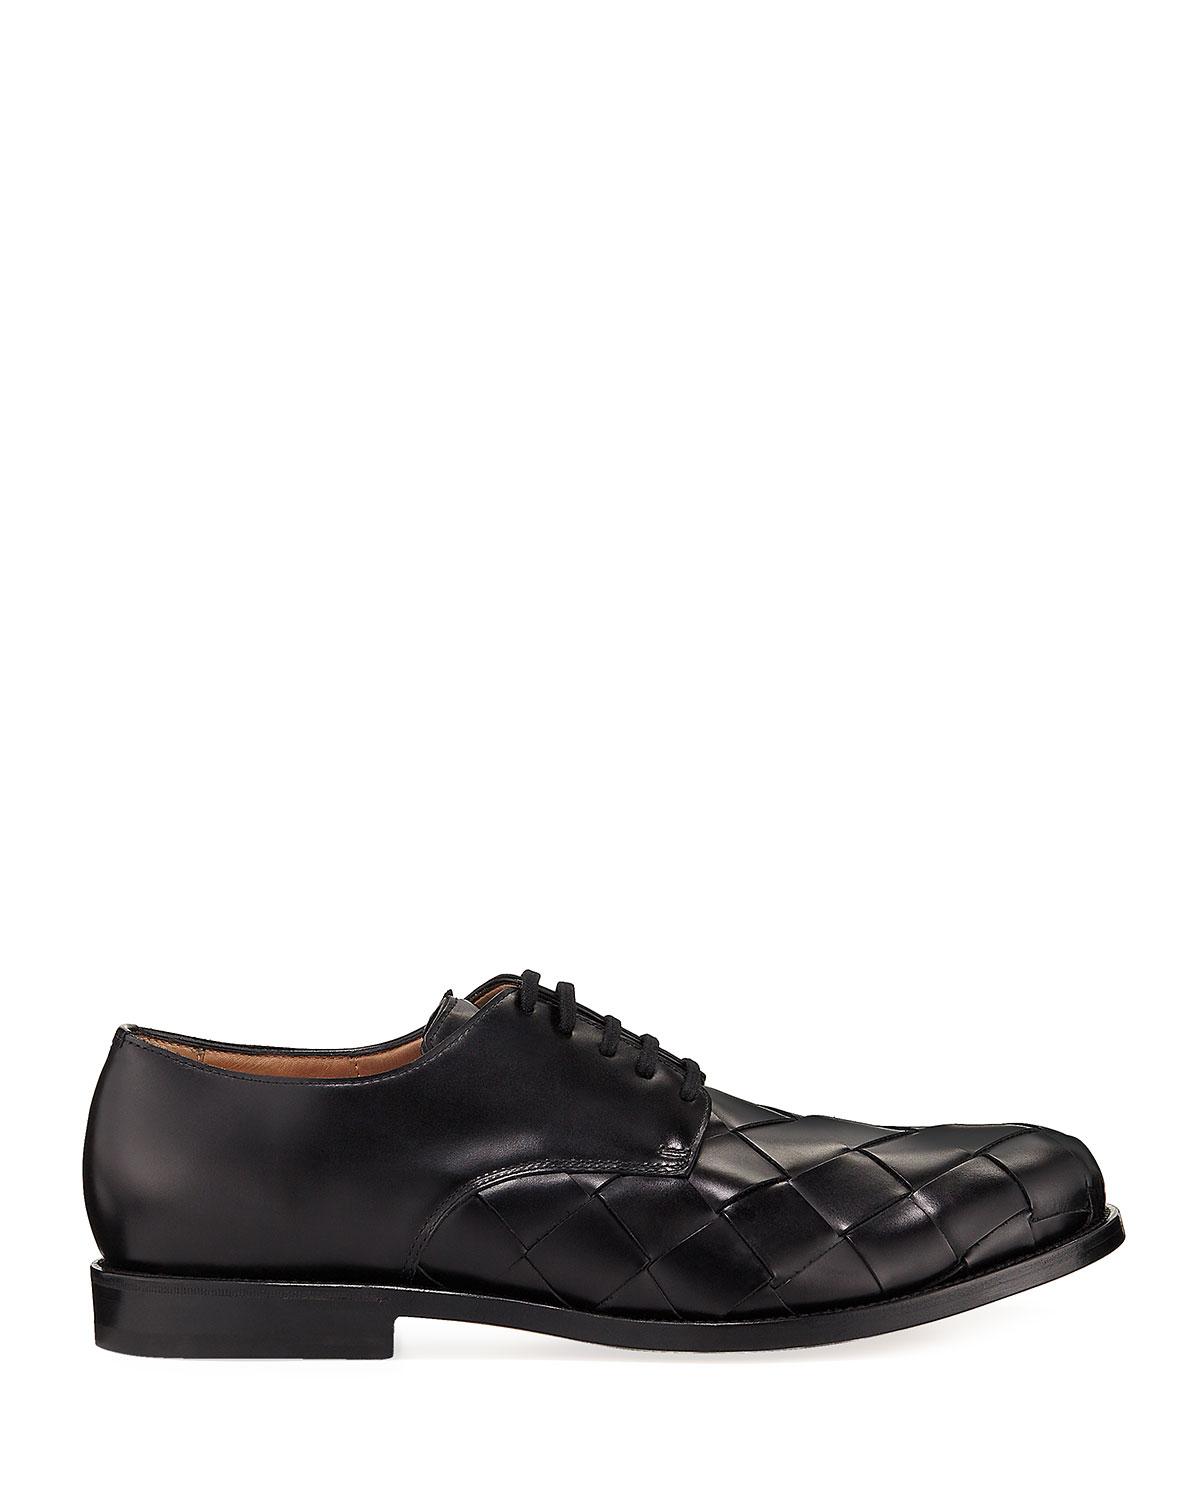 Bottega Veneta Men's Intrecciato Woven Leather Derby Shoes in Black for